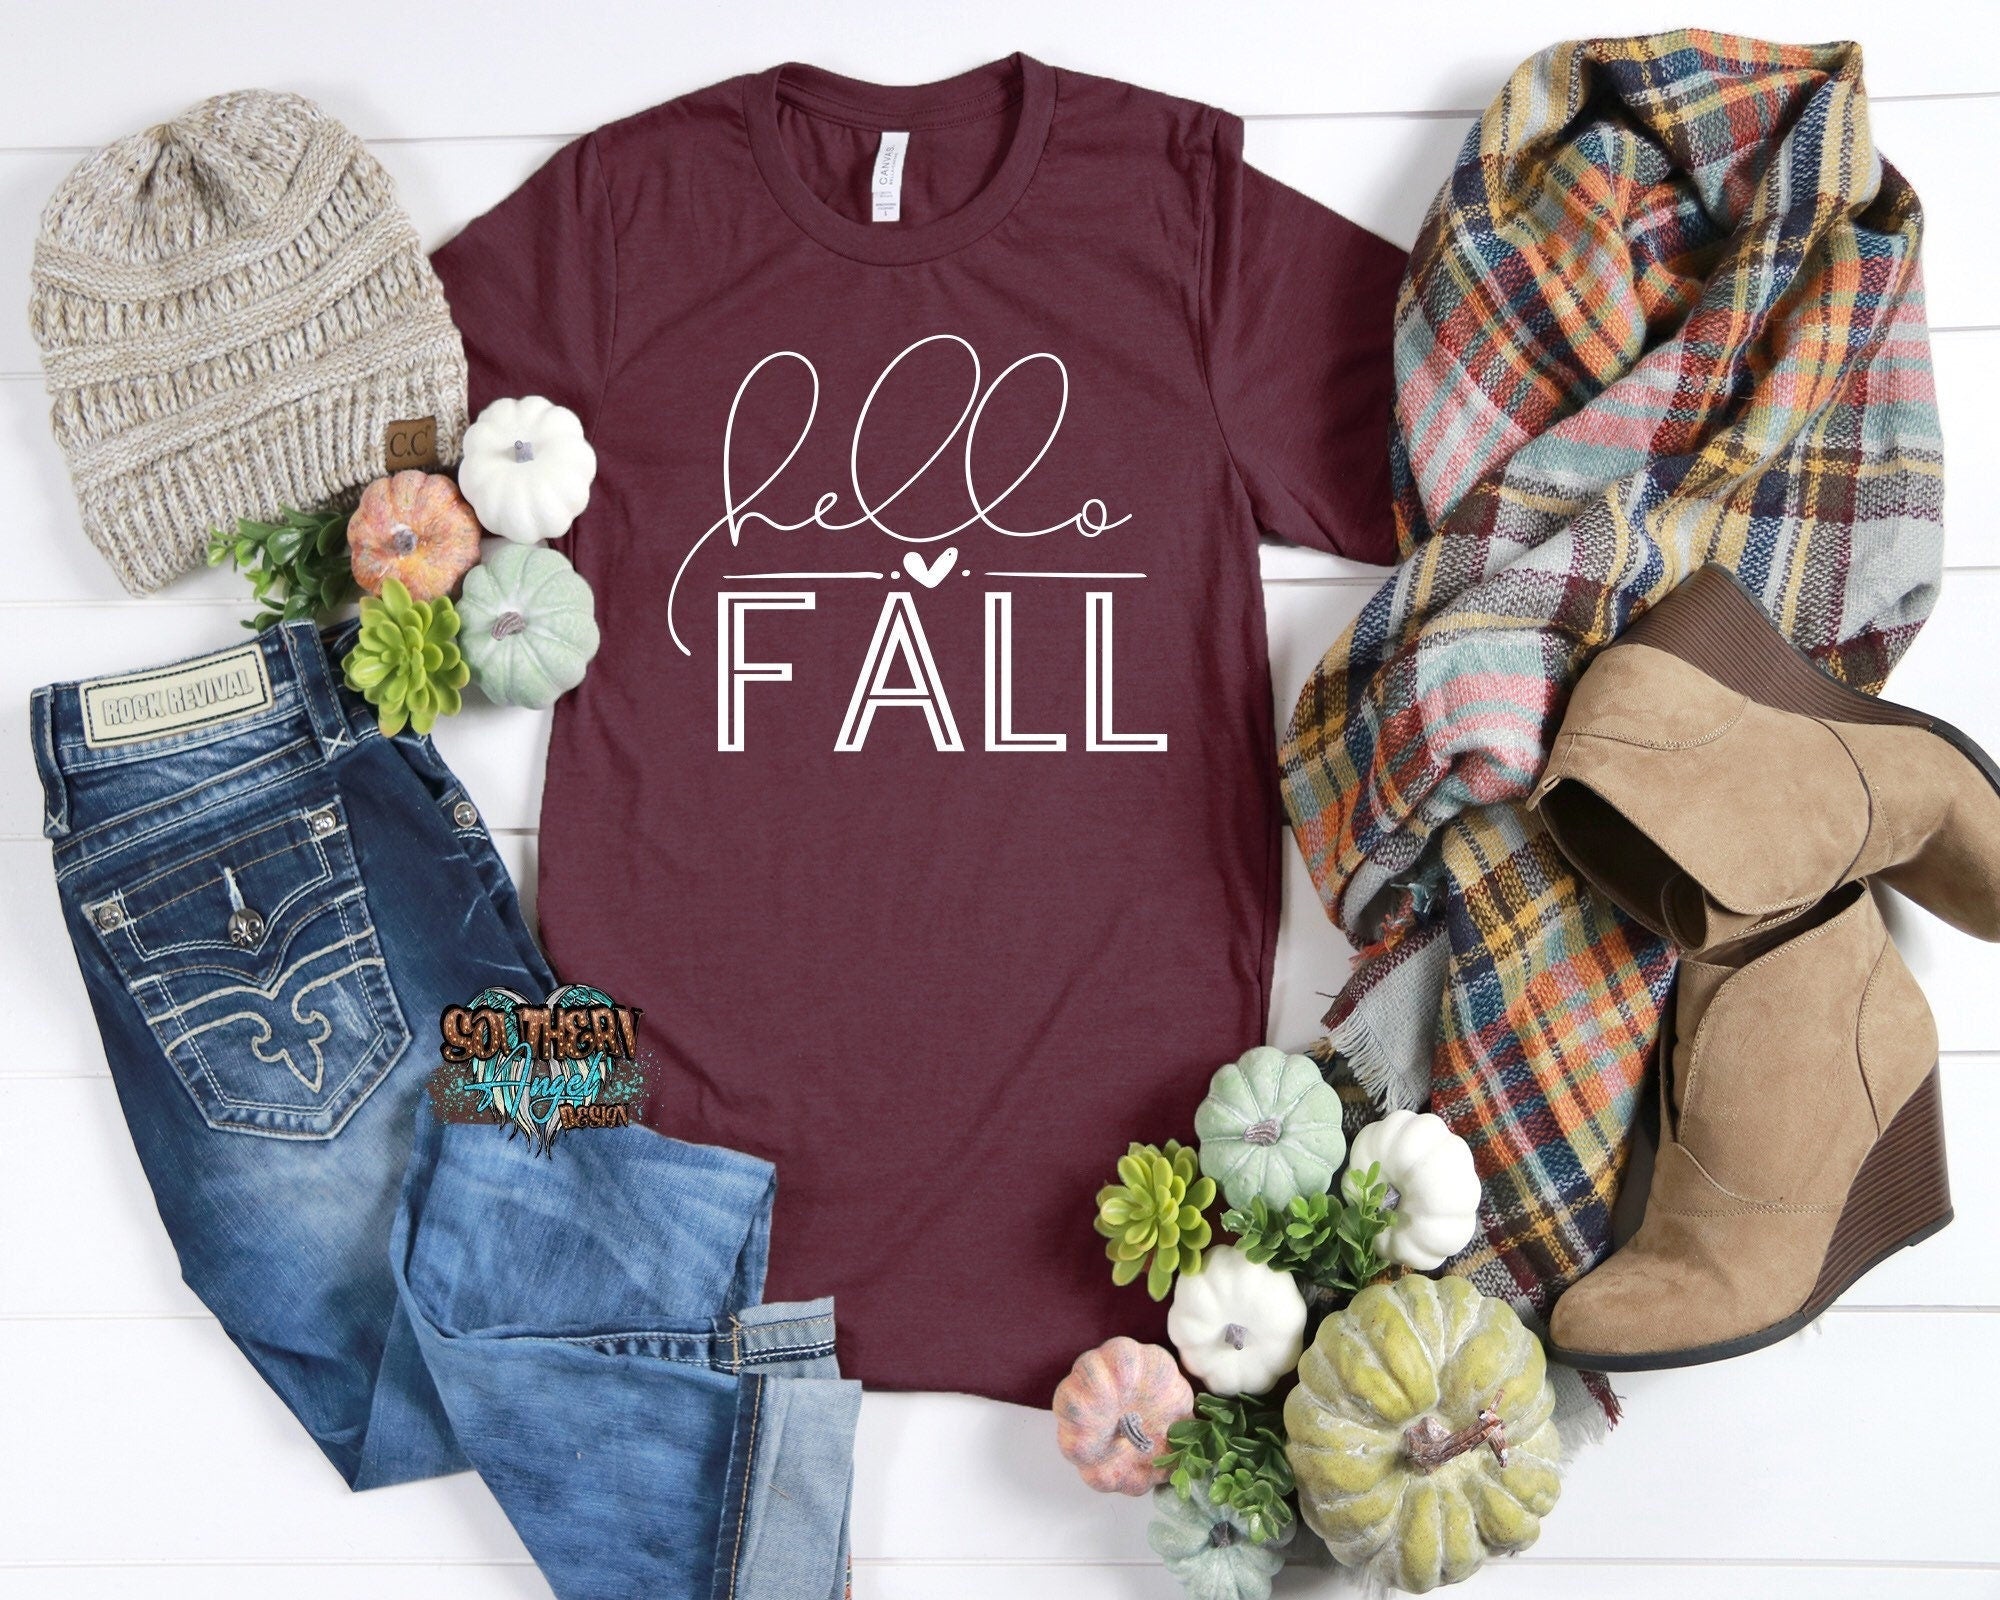 Hello Fall t-shirt